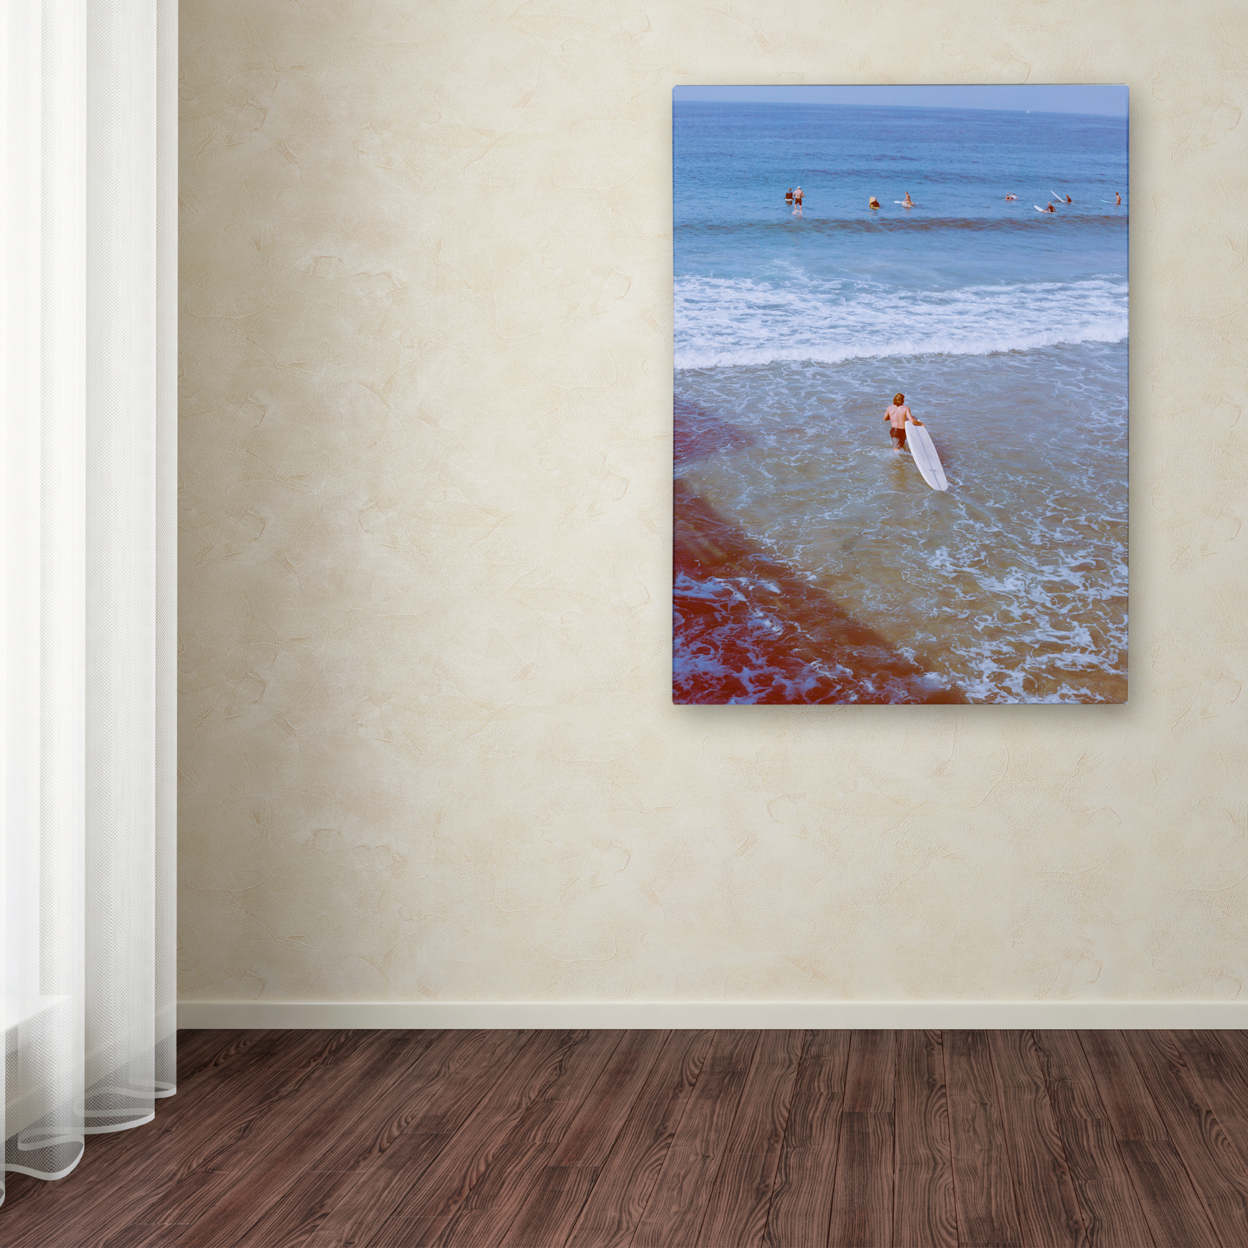 Ariane Moshayedi 'Surfer' Canvas Wall Art 35 X 47 Inches